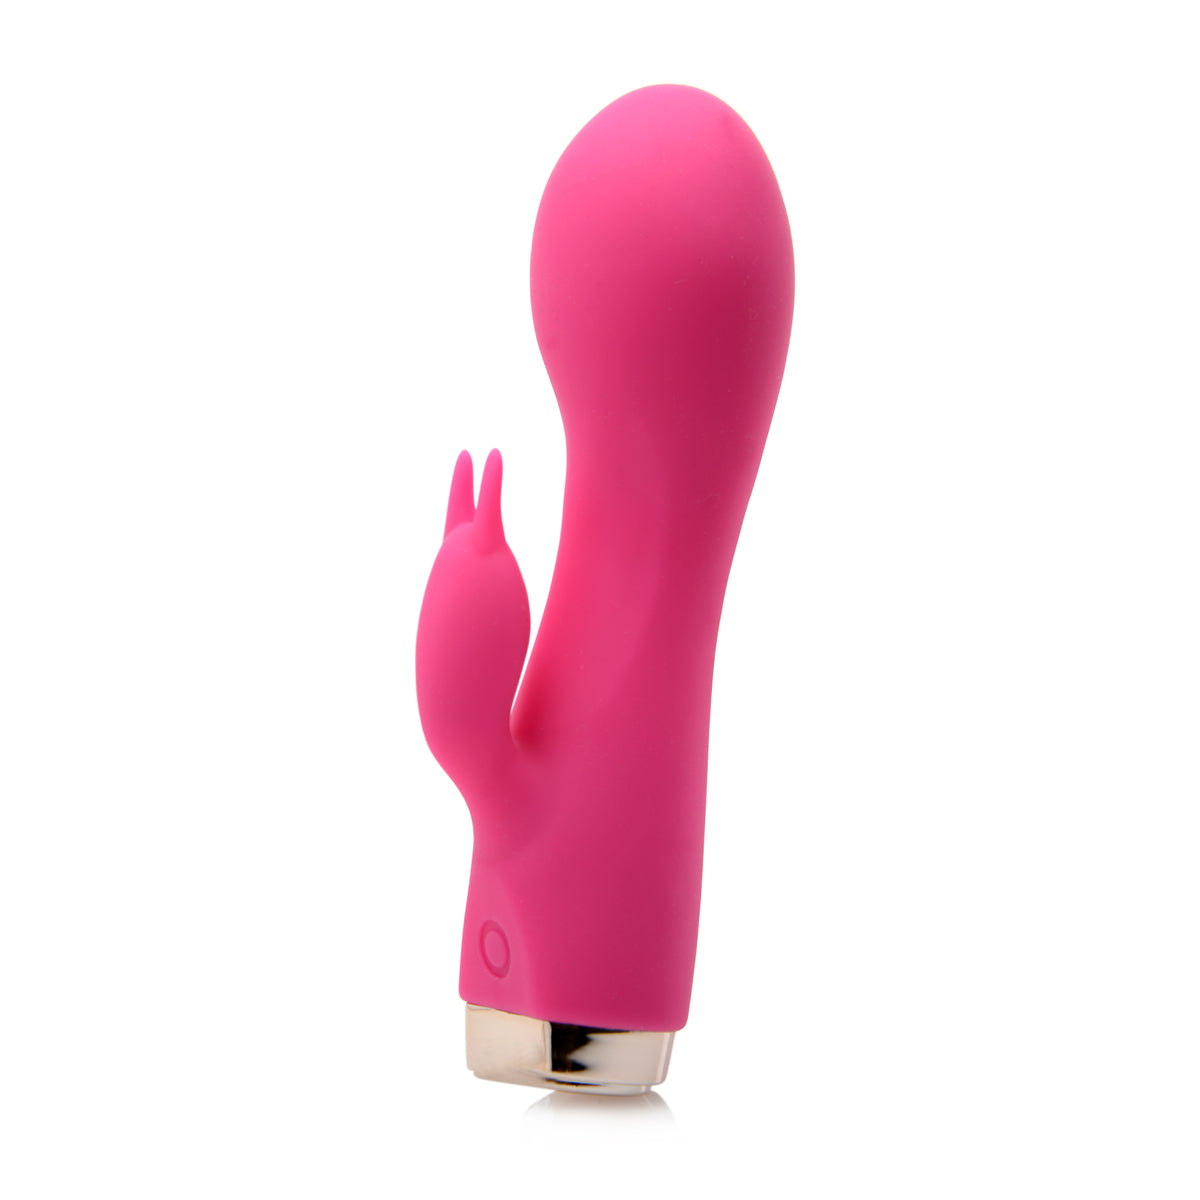 10X Wonder Mini Rabbit Silicone Vibrator - Pink